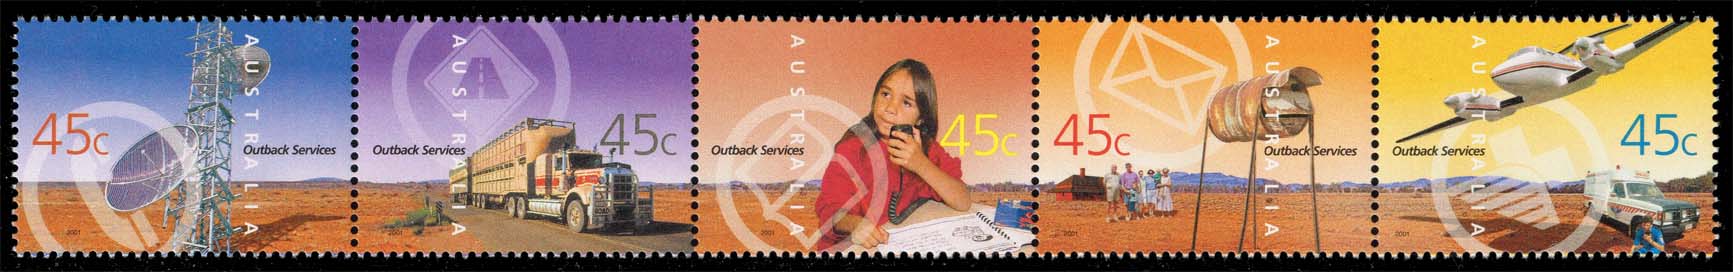 Australia #1966a Outback Services Strip of 5; MNH